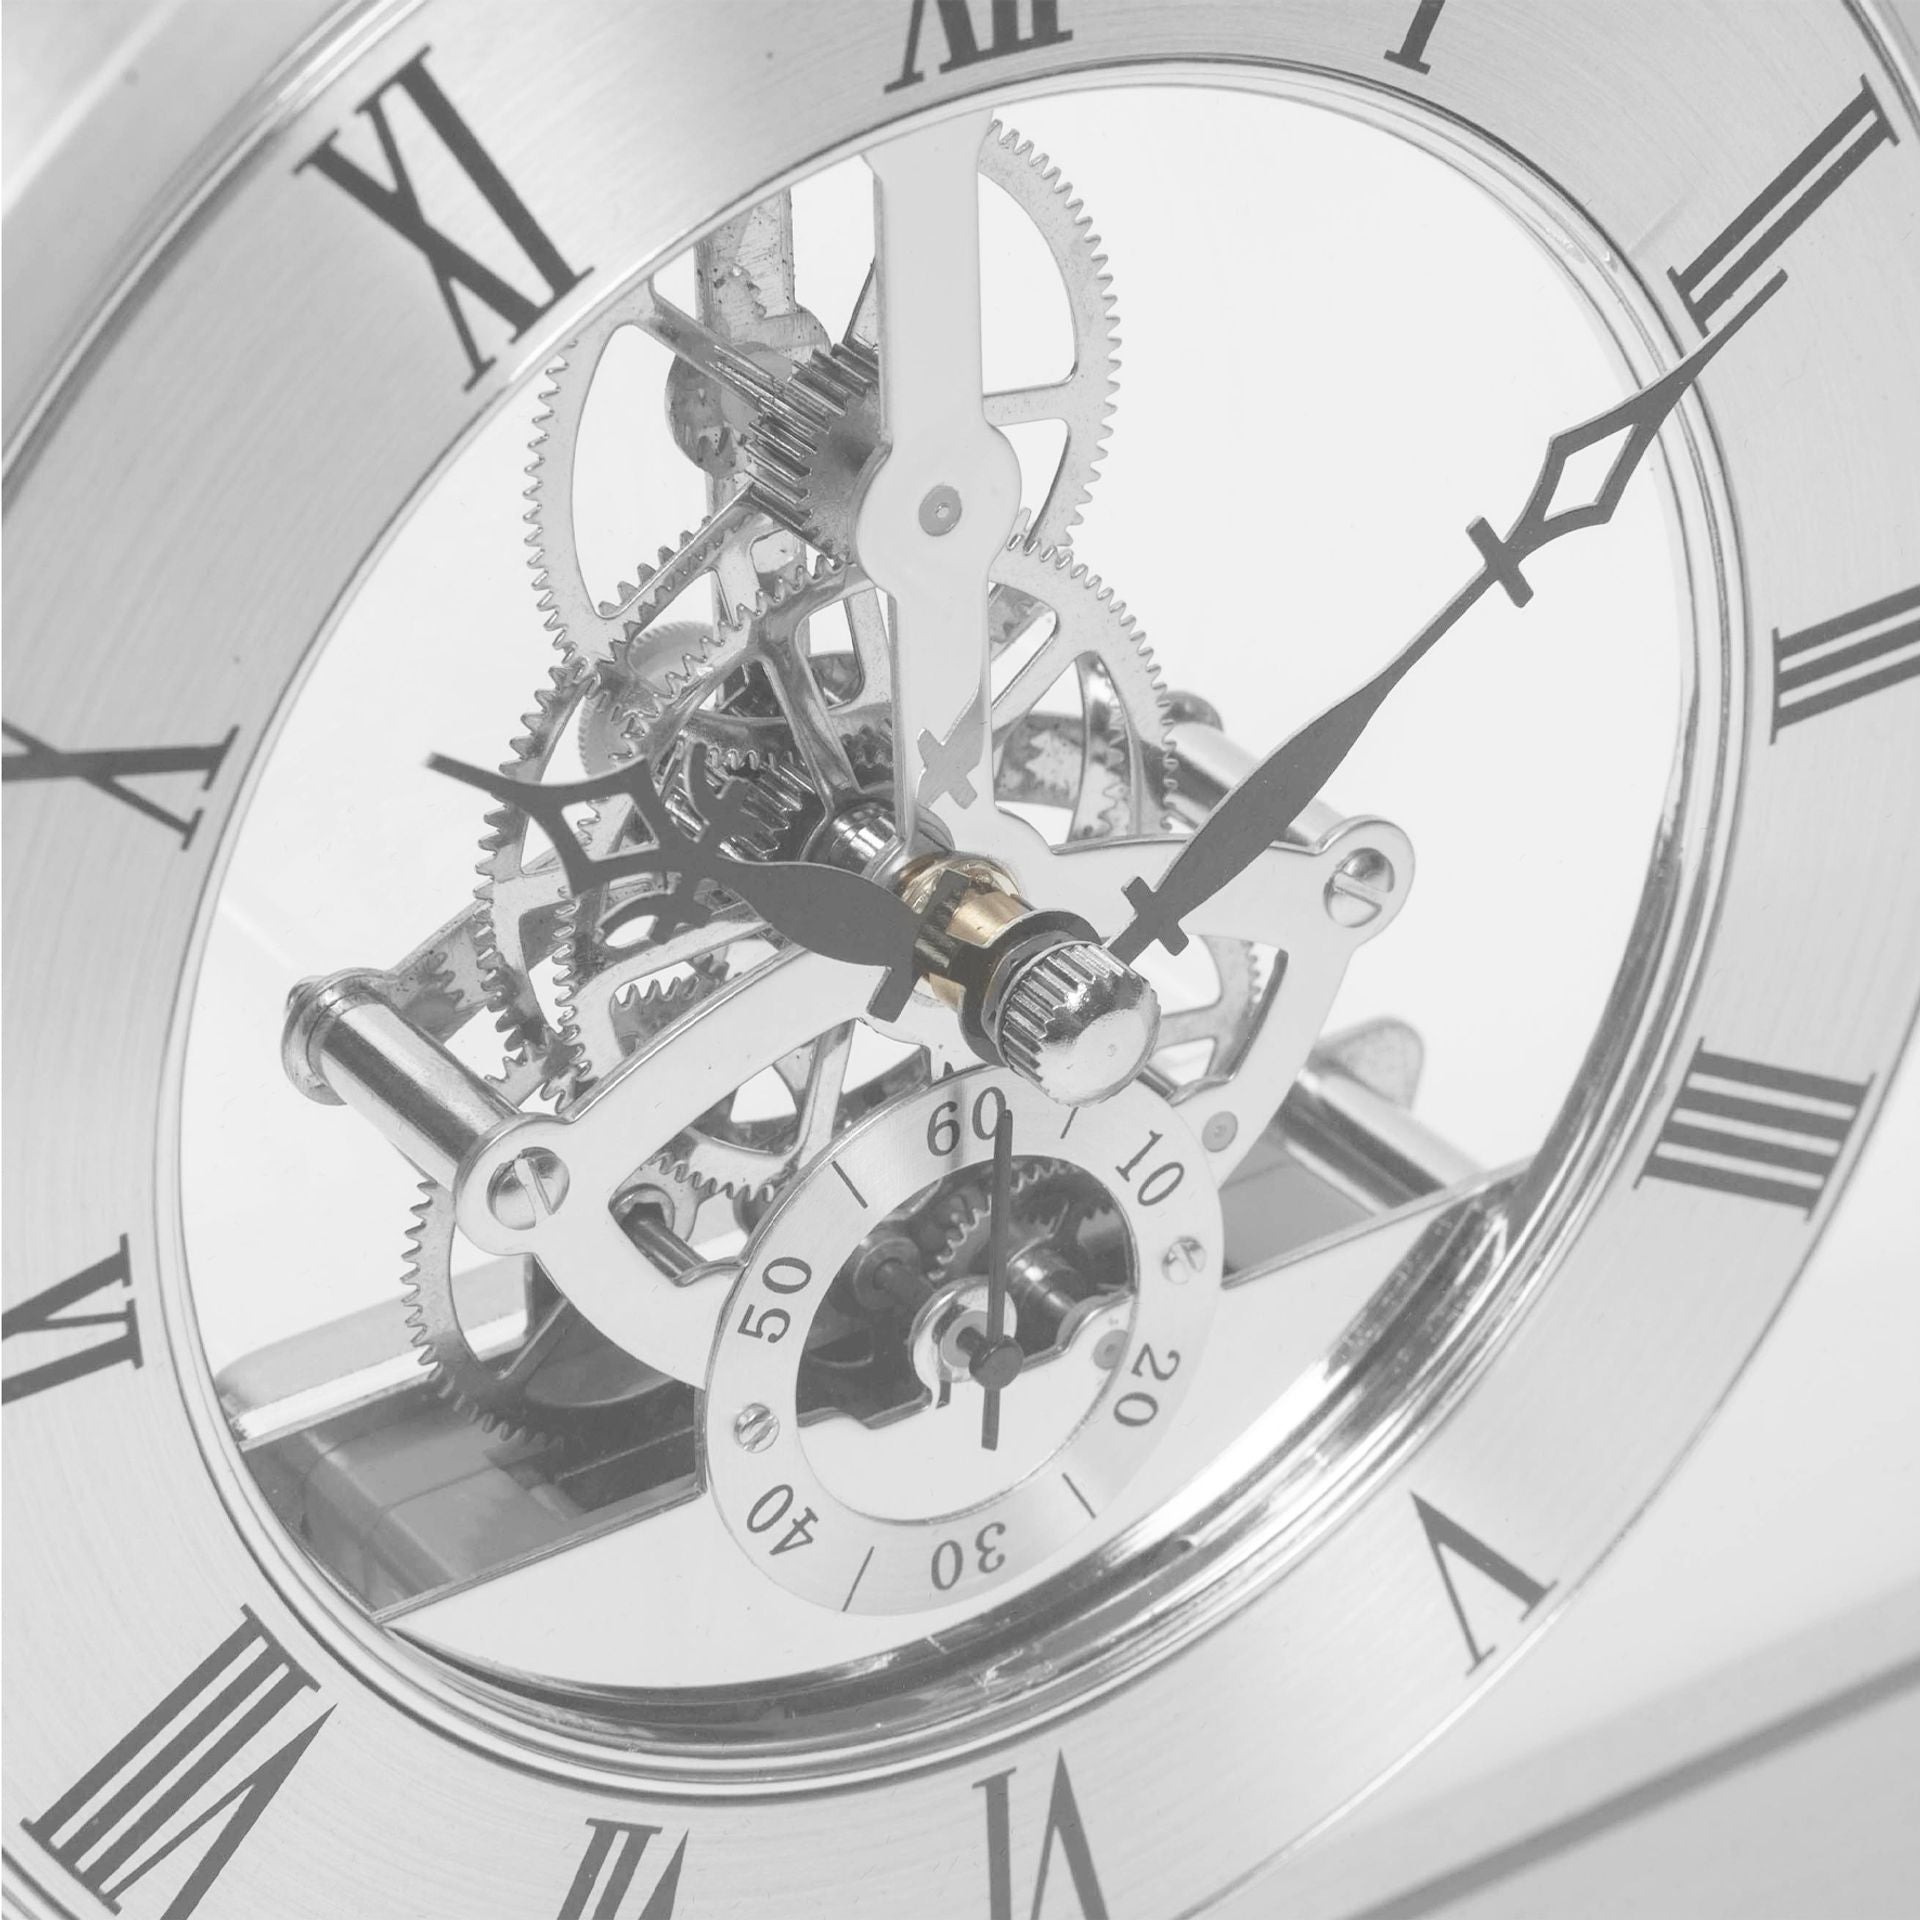 Wm. Widdop Brushed Aluminium Arched Mantel Clock